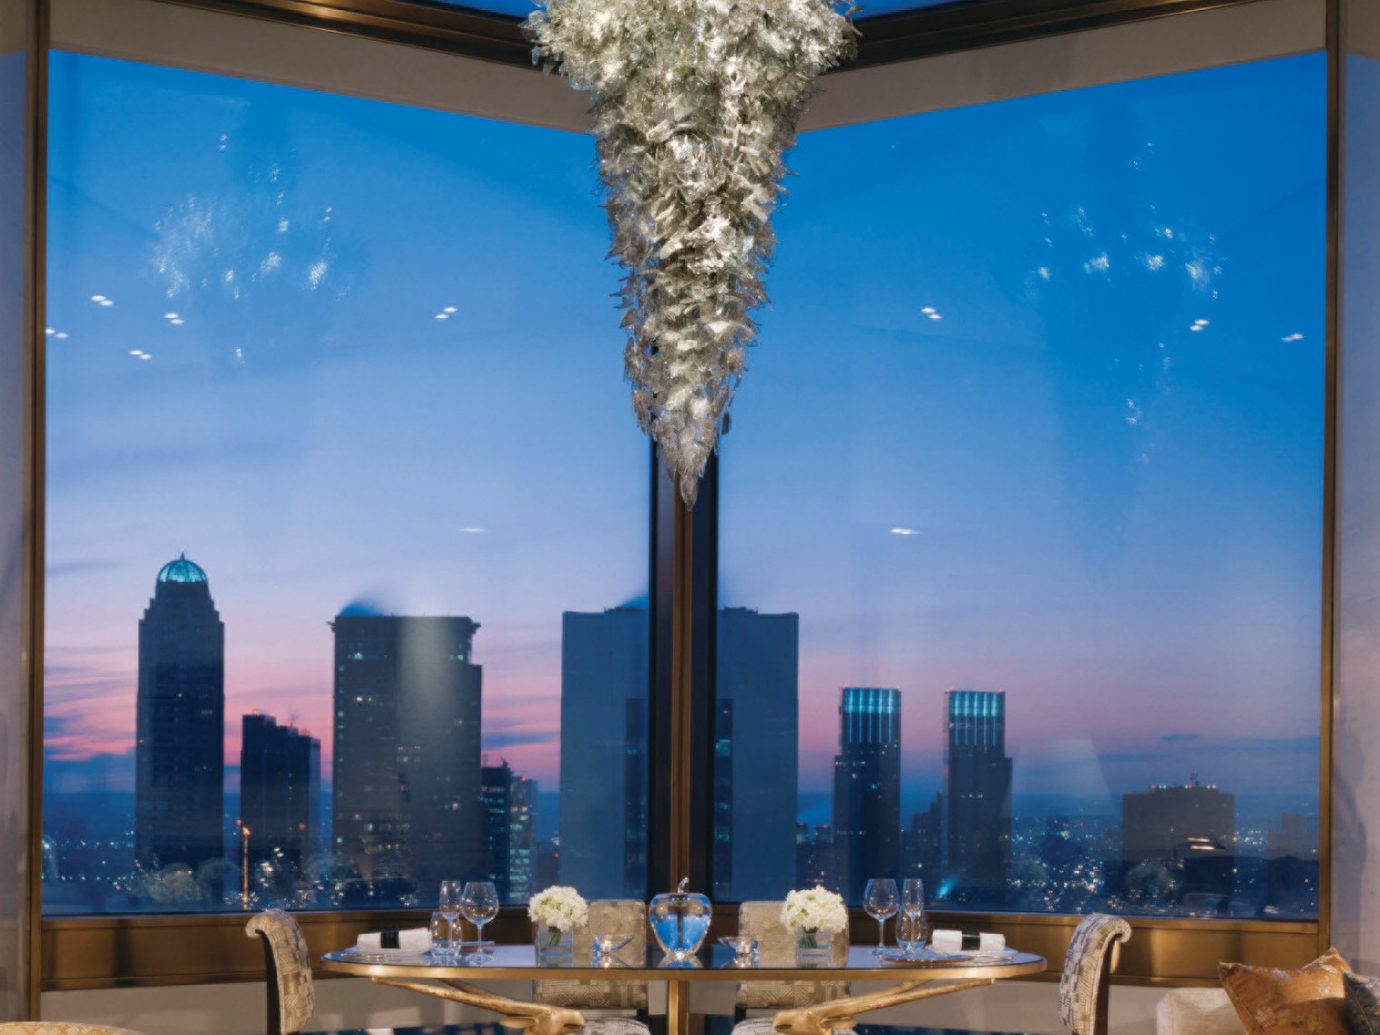 Hotels Luxury Travel ceiling wall interior design window Lobby wallpaper sky overlooking